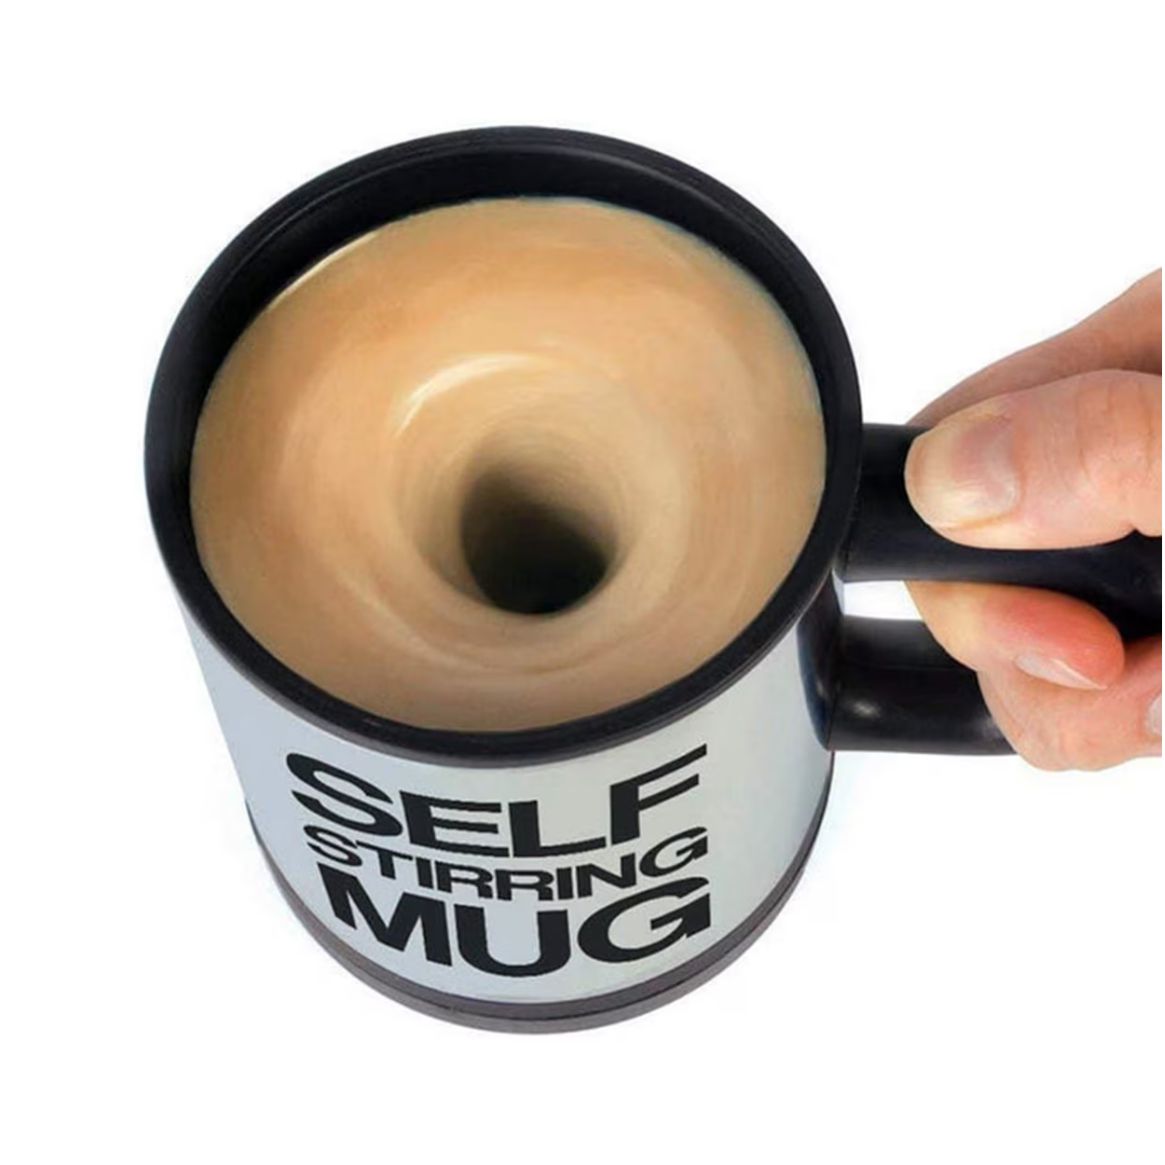 Self-stirring cup